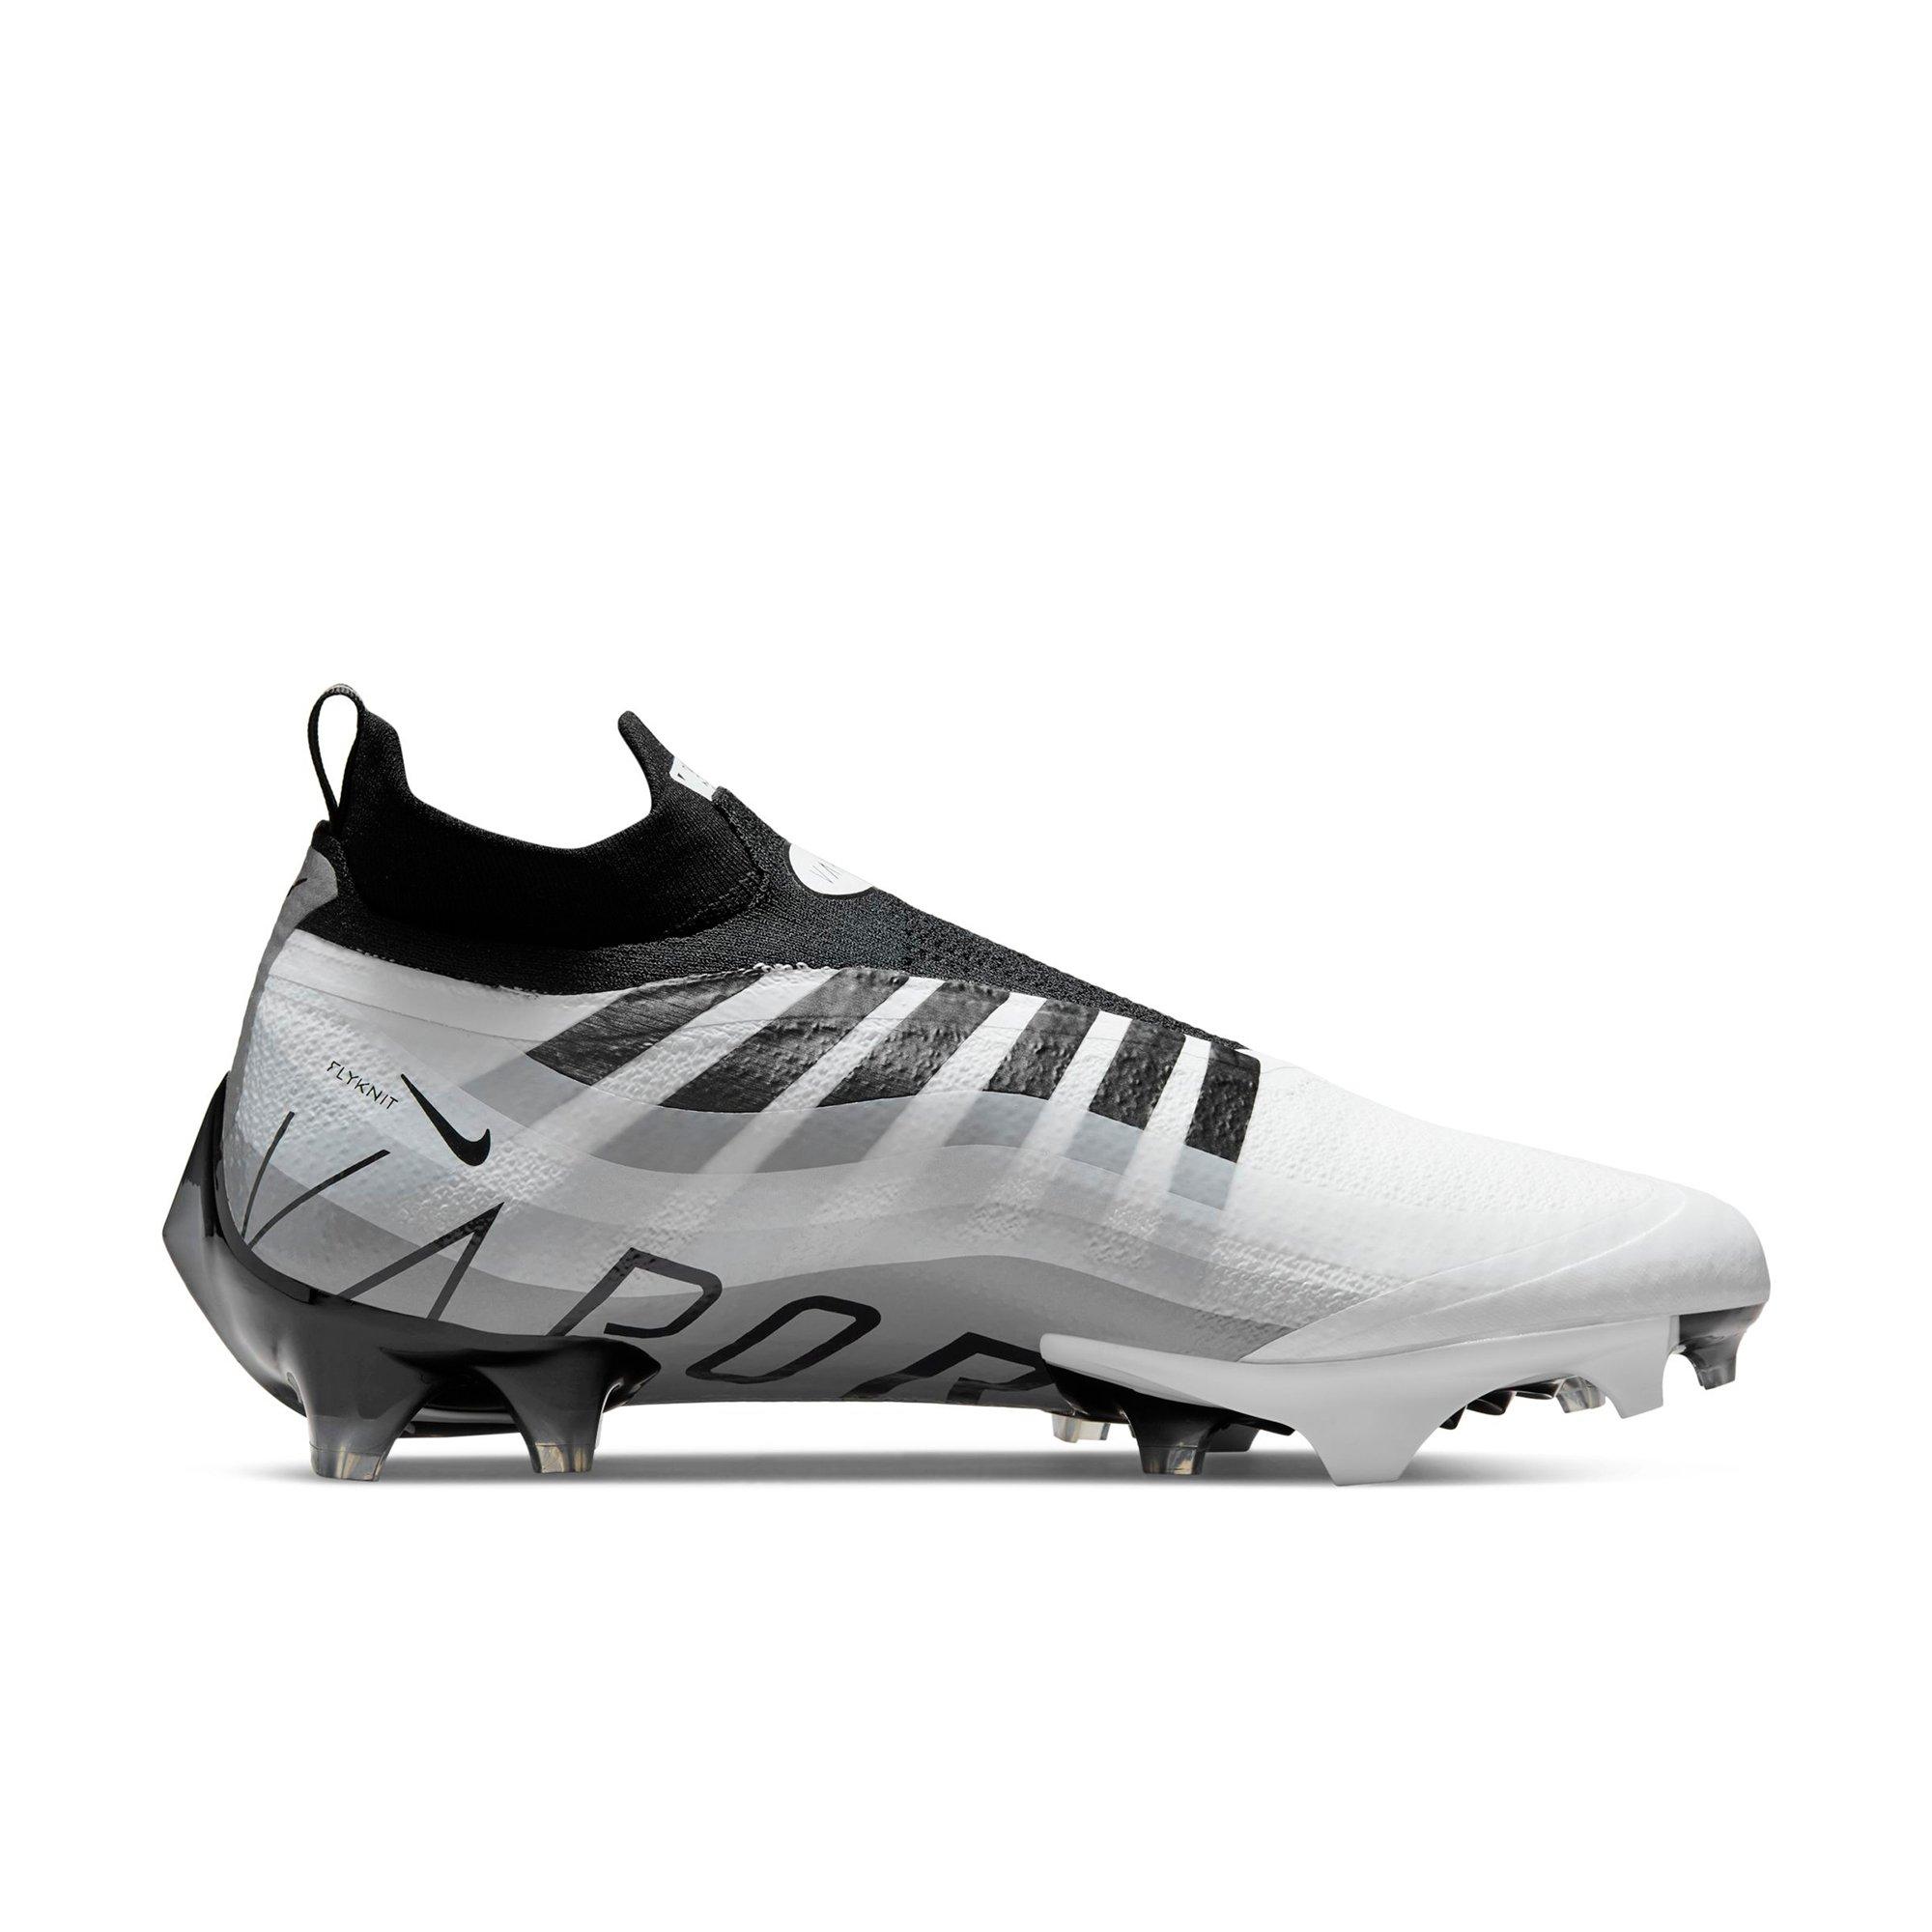 (Size 13.5) Nike Vapor Edge Elite 360 'Multi Zebra Stripes' Flyknit  Lacrosse/Football Cleats